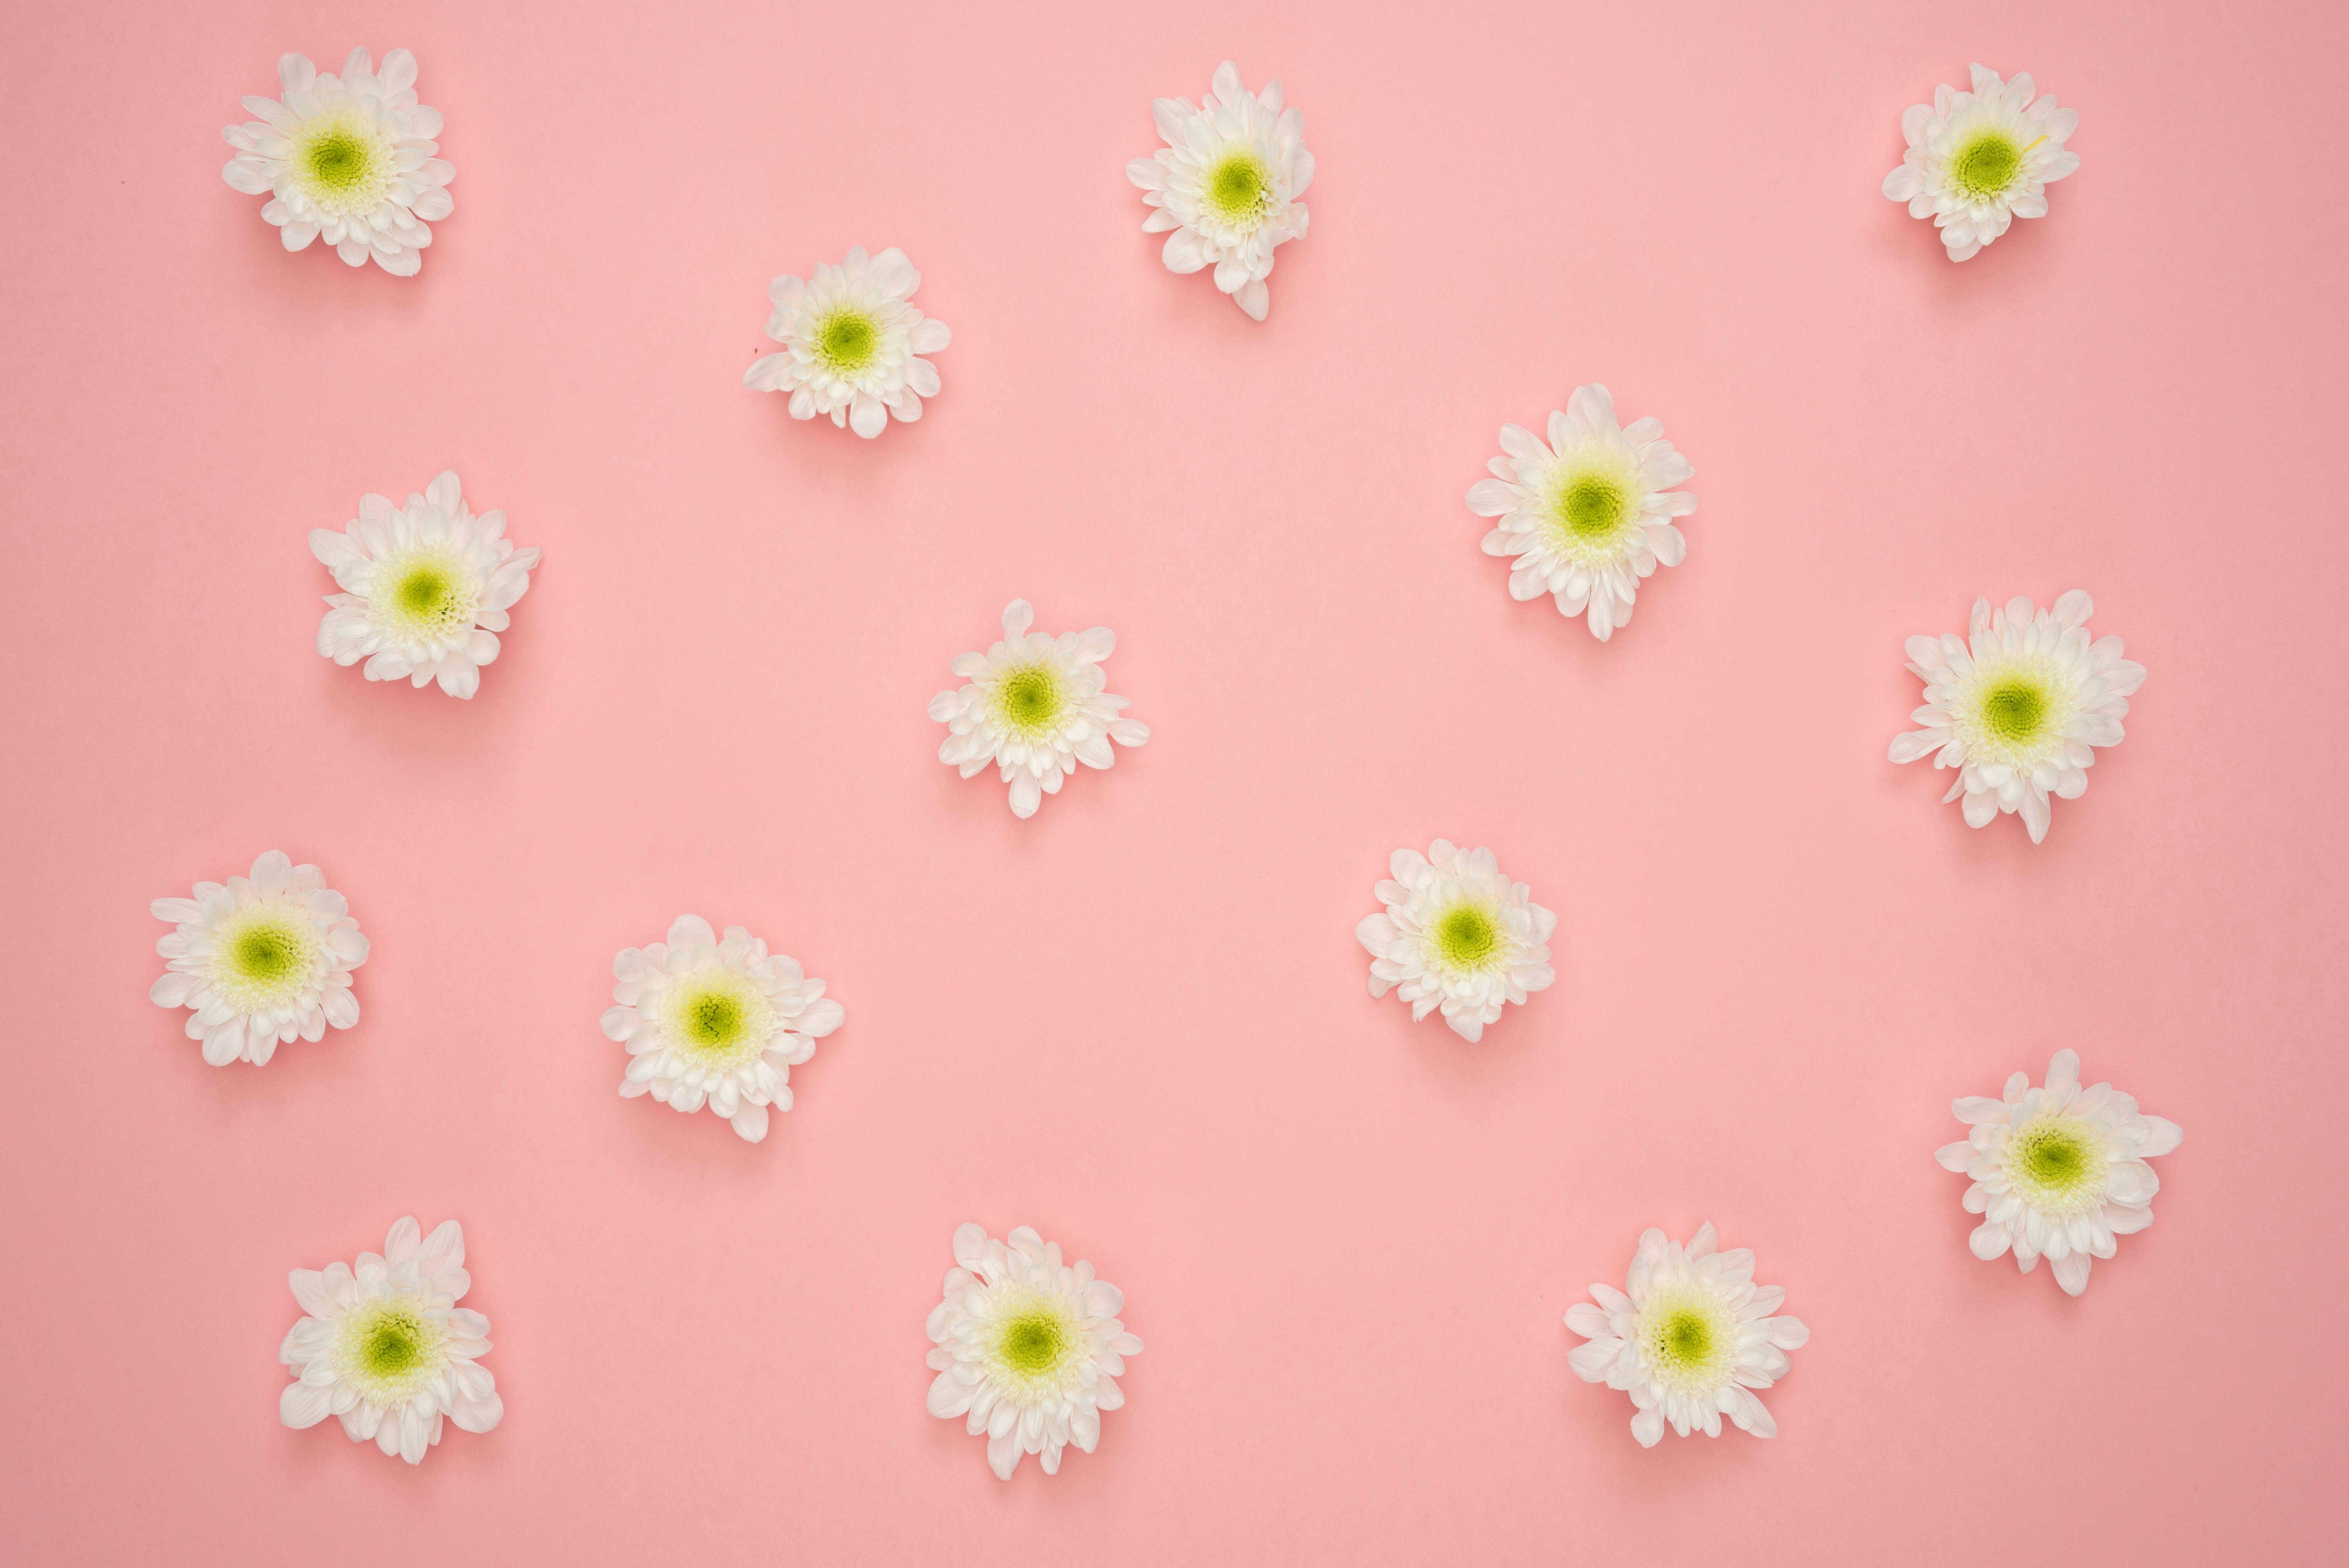 1000+ Great Flower Background Photos · Pexels · Free Stock Photos